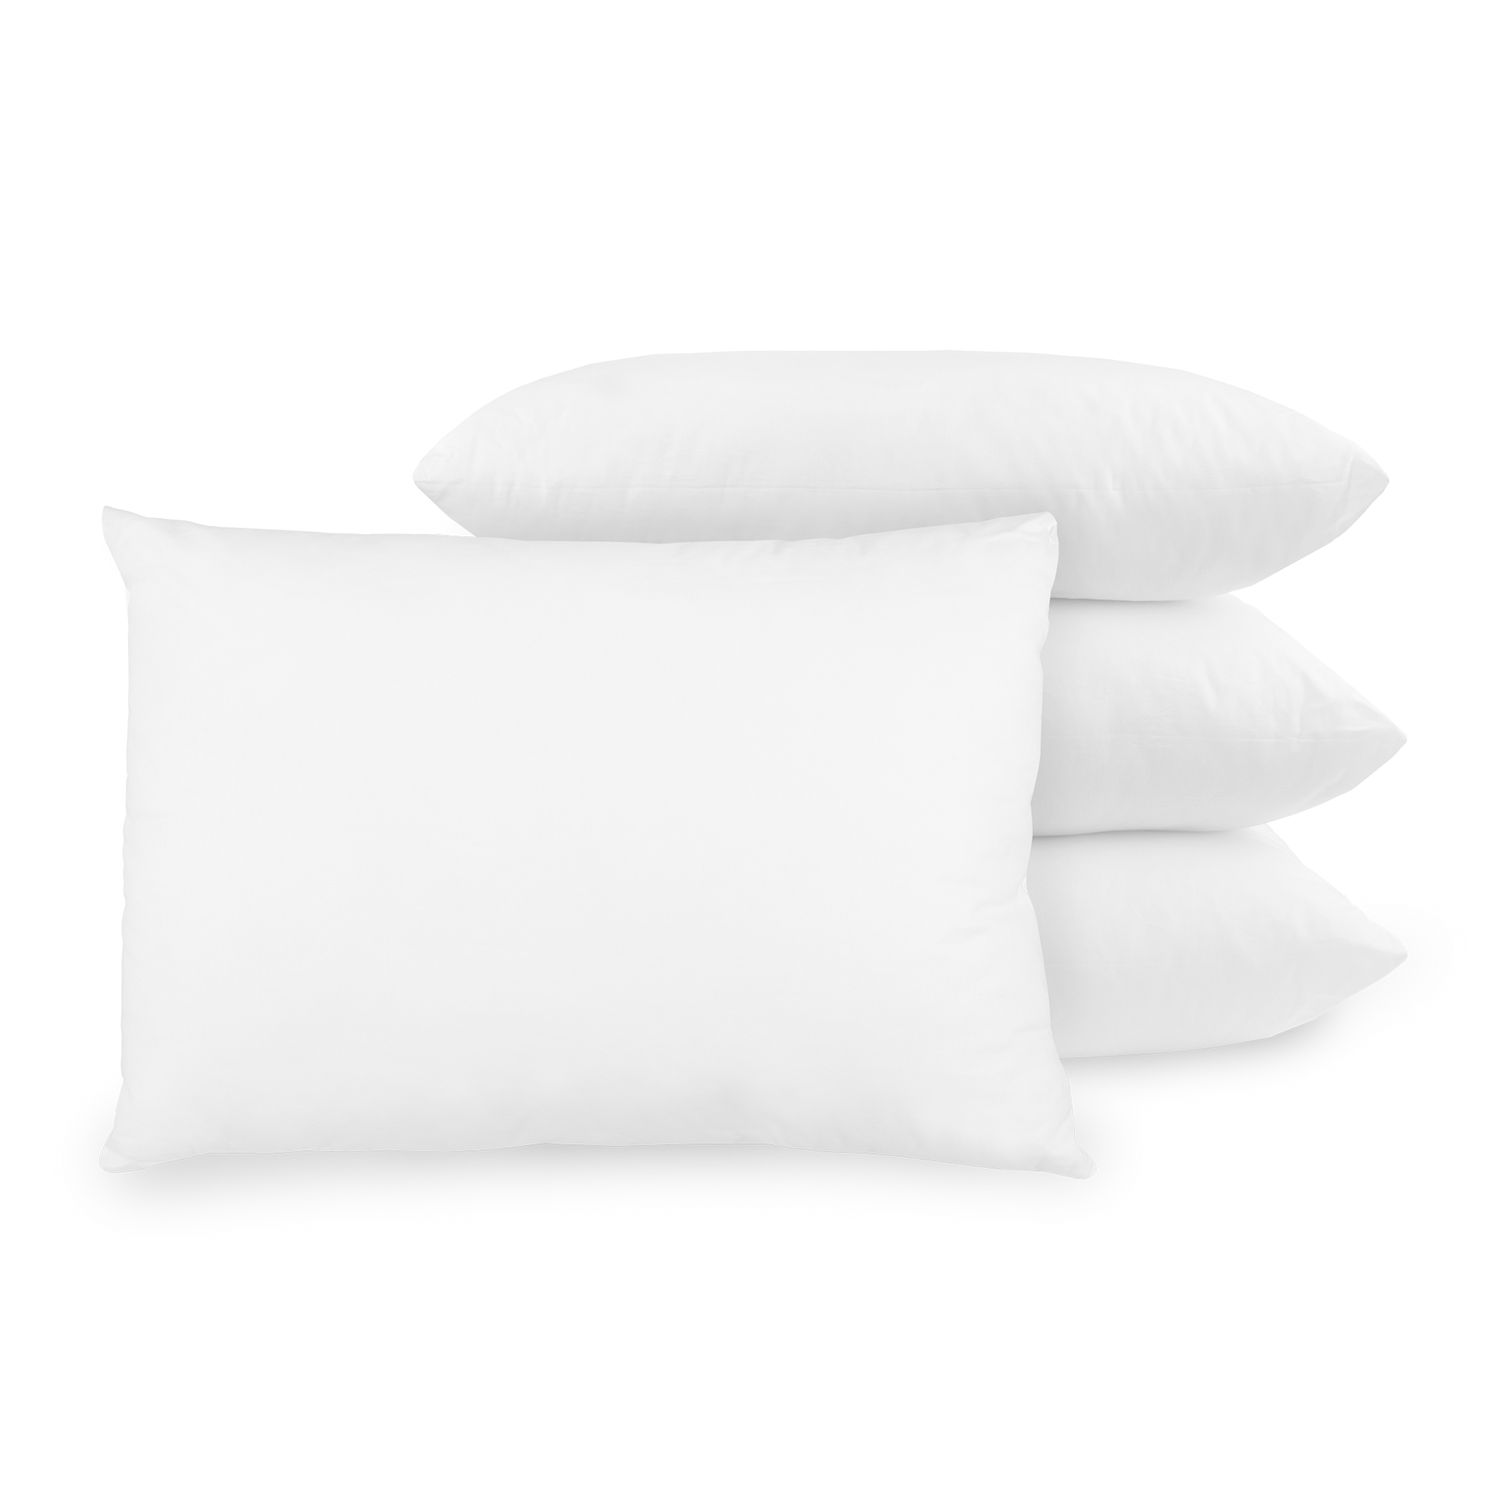 columbia ultimate down alternative pillow reviews